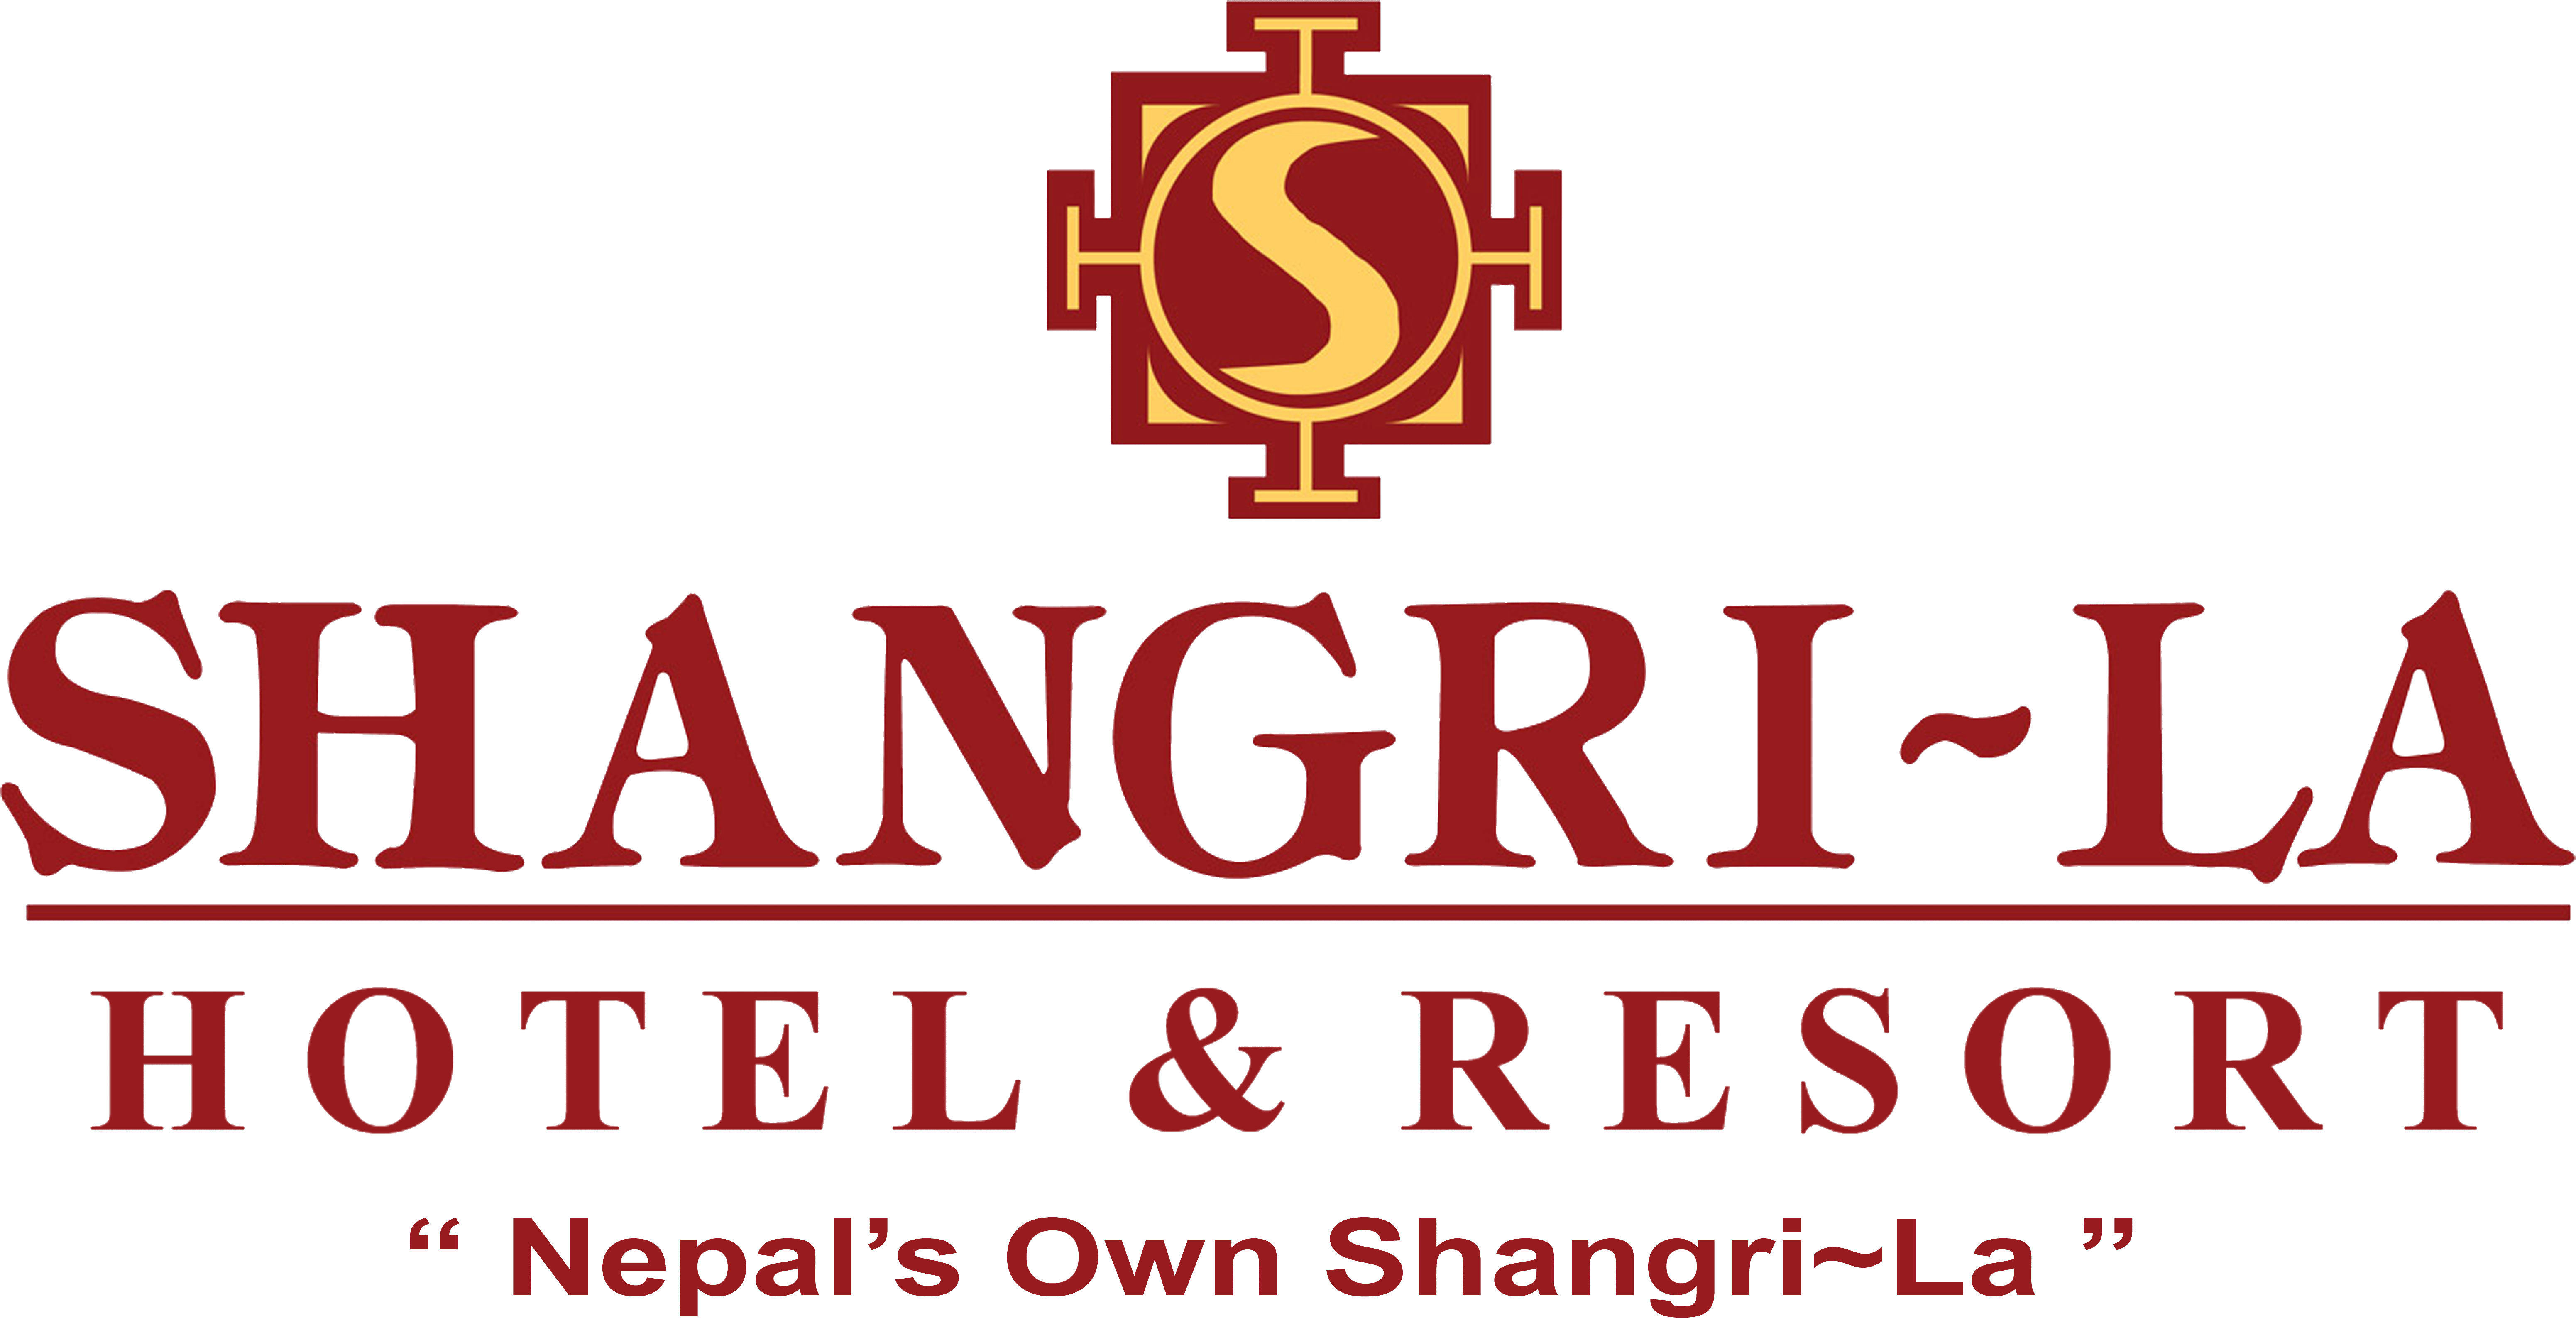 Shangri la Hotel